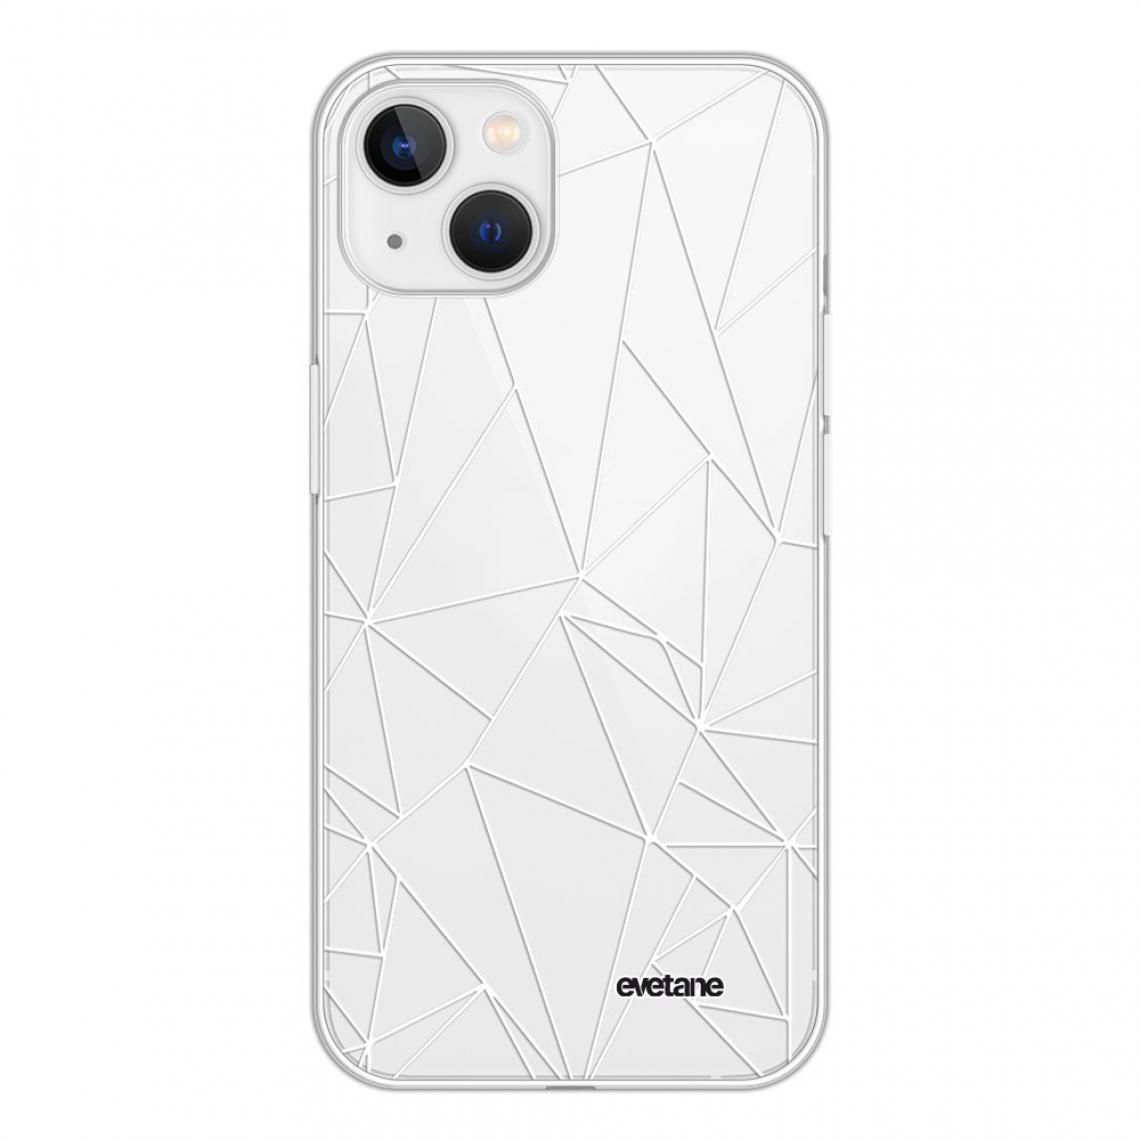 Evetane - Coque iPhone 13 Mini souple silicone transparente - Coque, étui smartphone